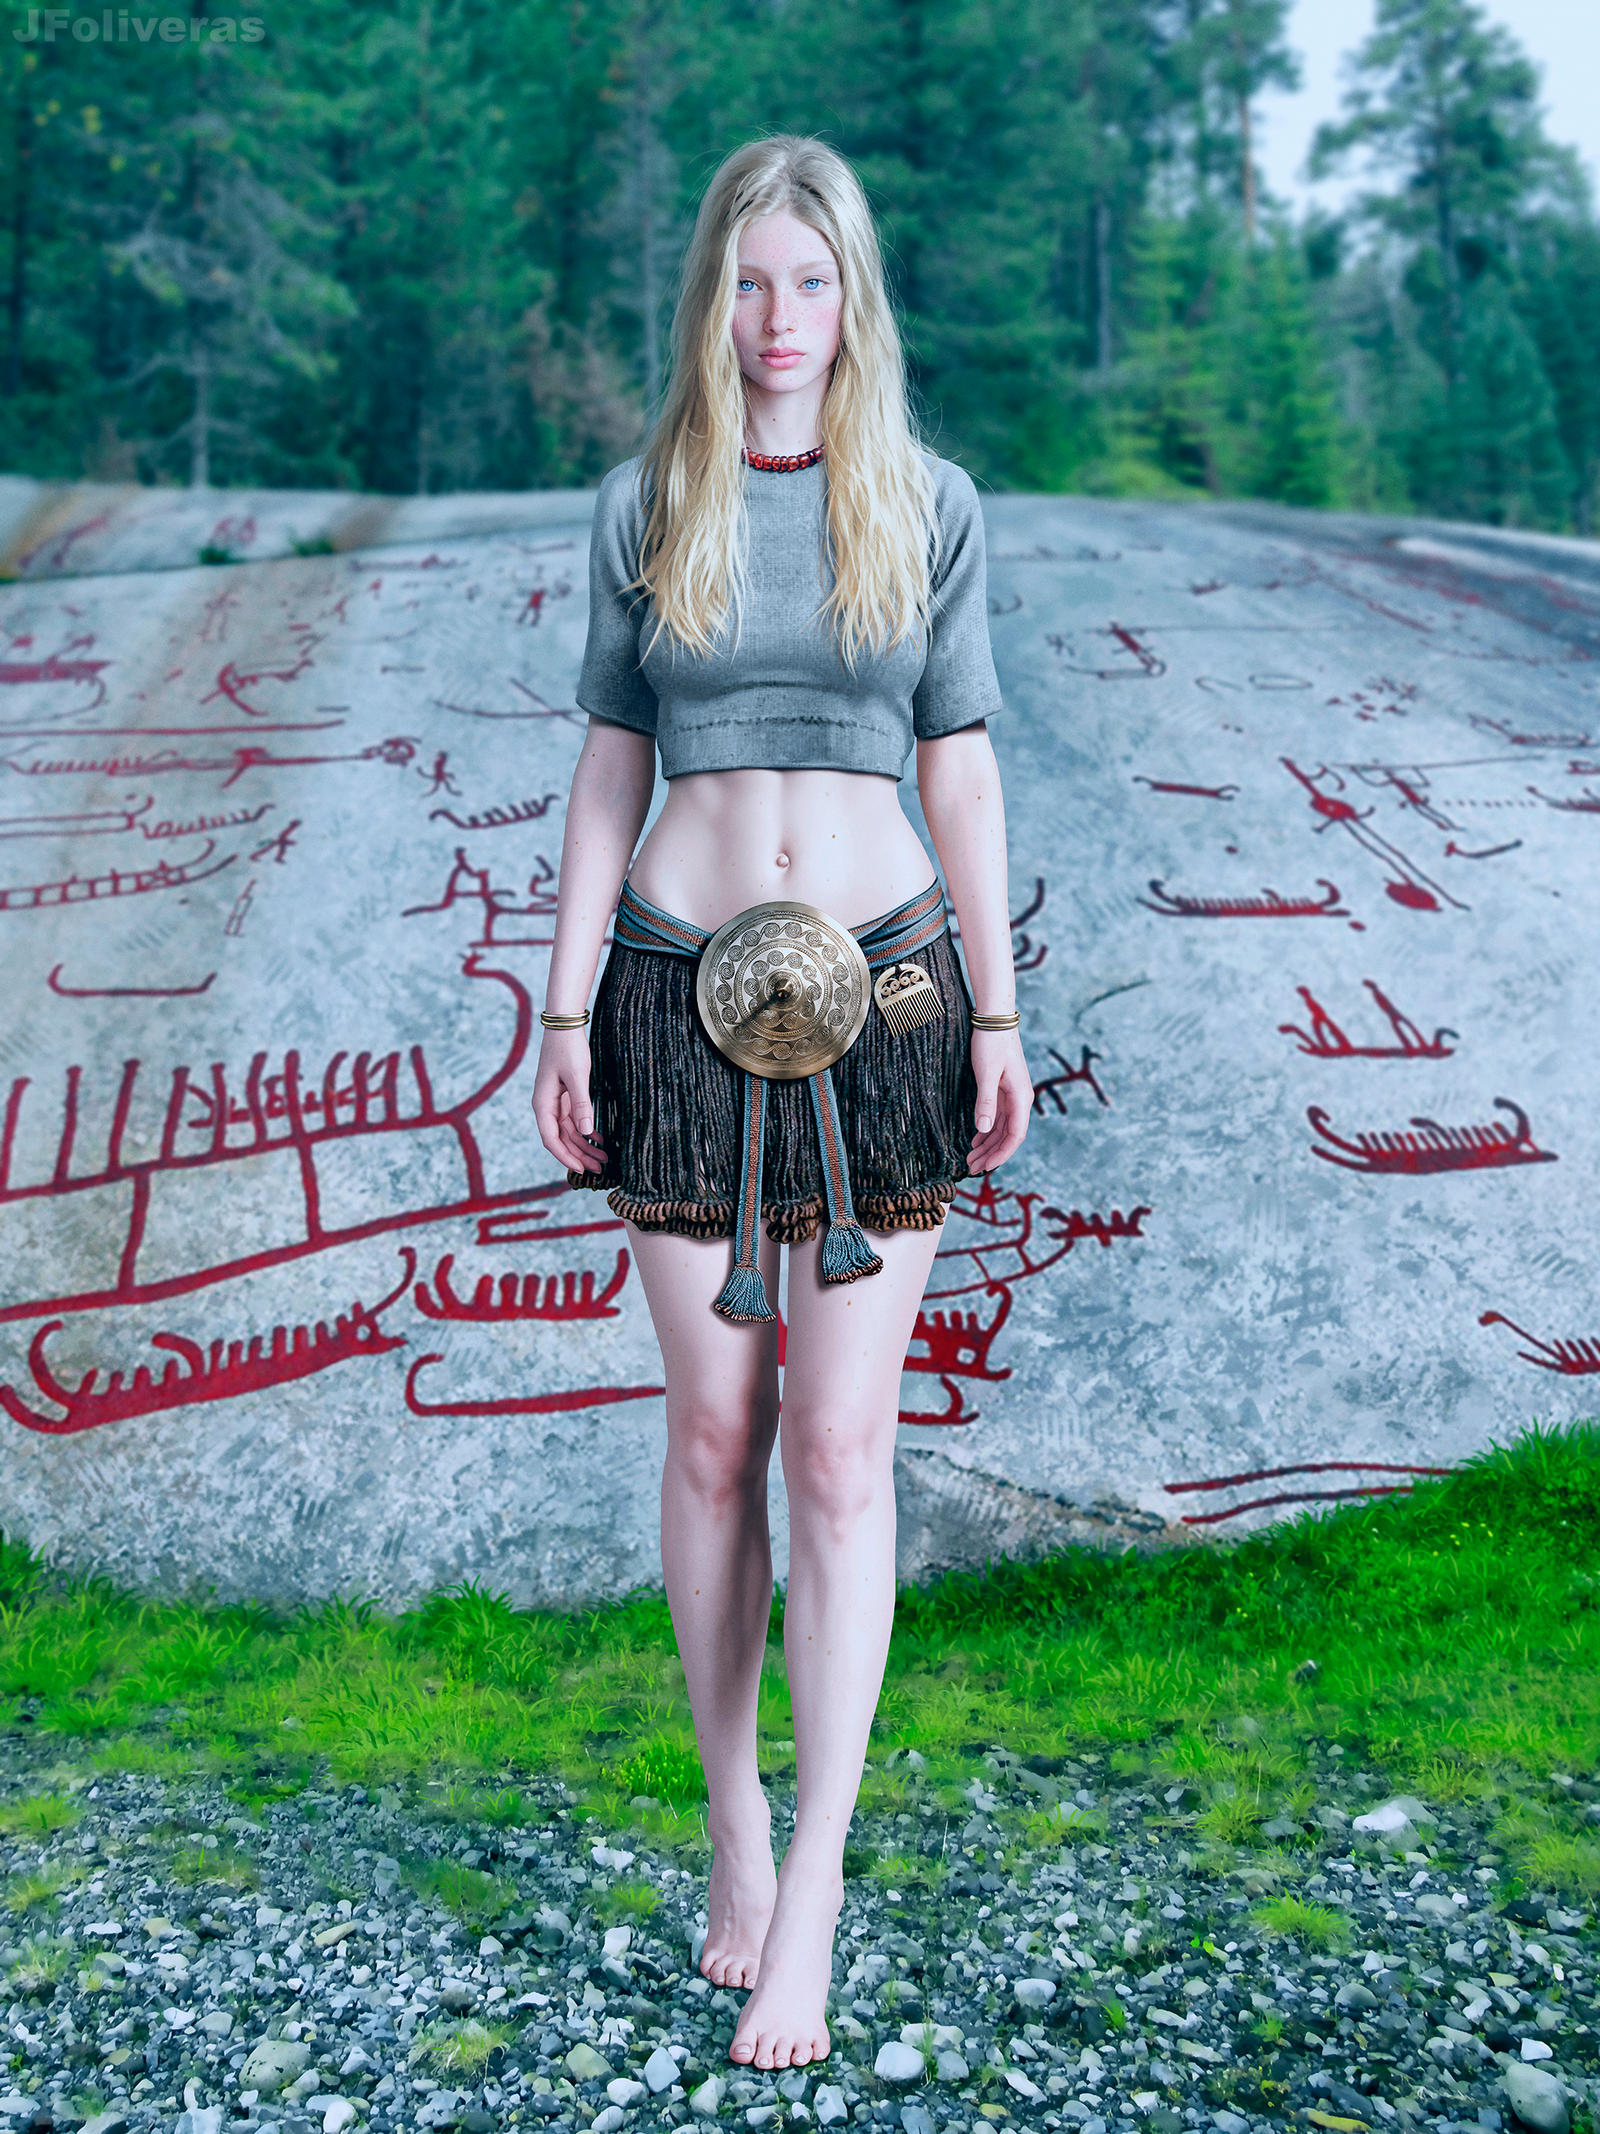 Nordic Bronze Age girl by JFoliveras on DeviantArt